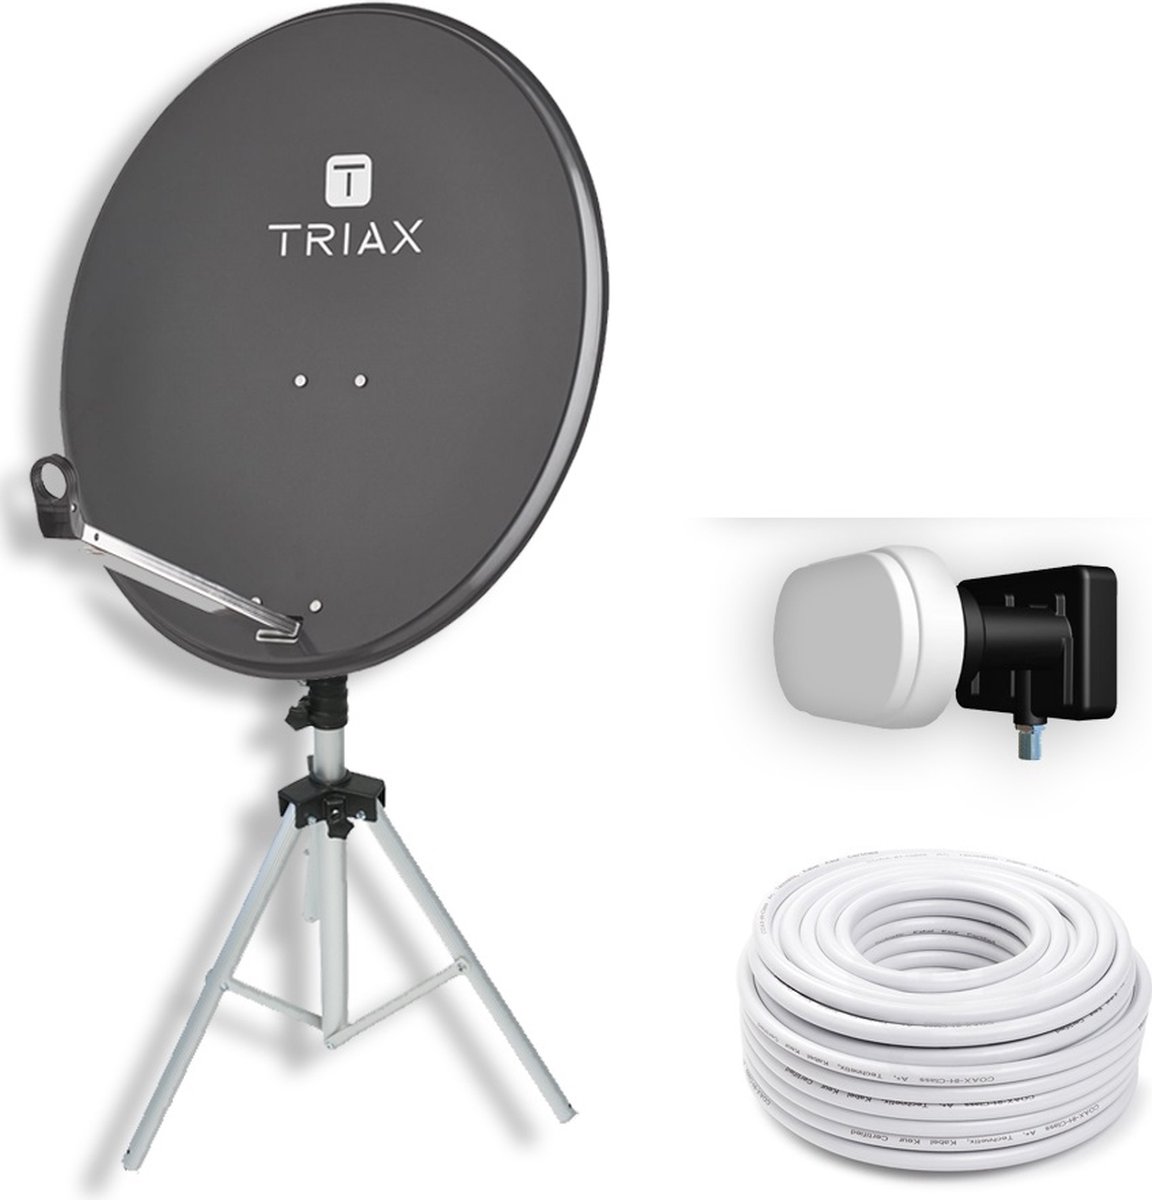 65cm Schotel antenne + 3° single DUO LNB (Canal Digitaal Ready) + 10 M Coax - Triax